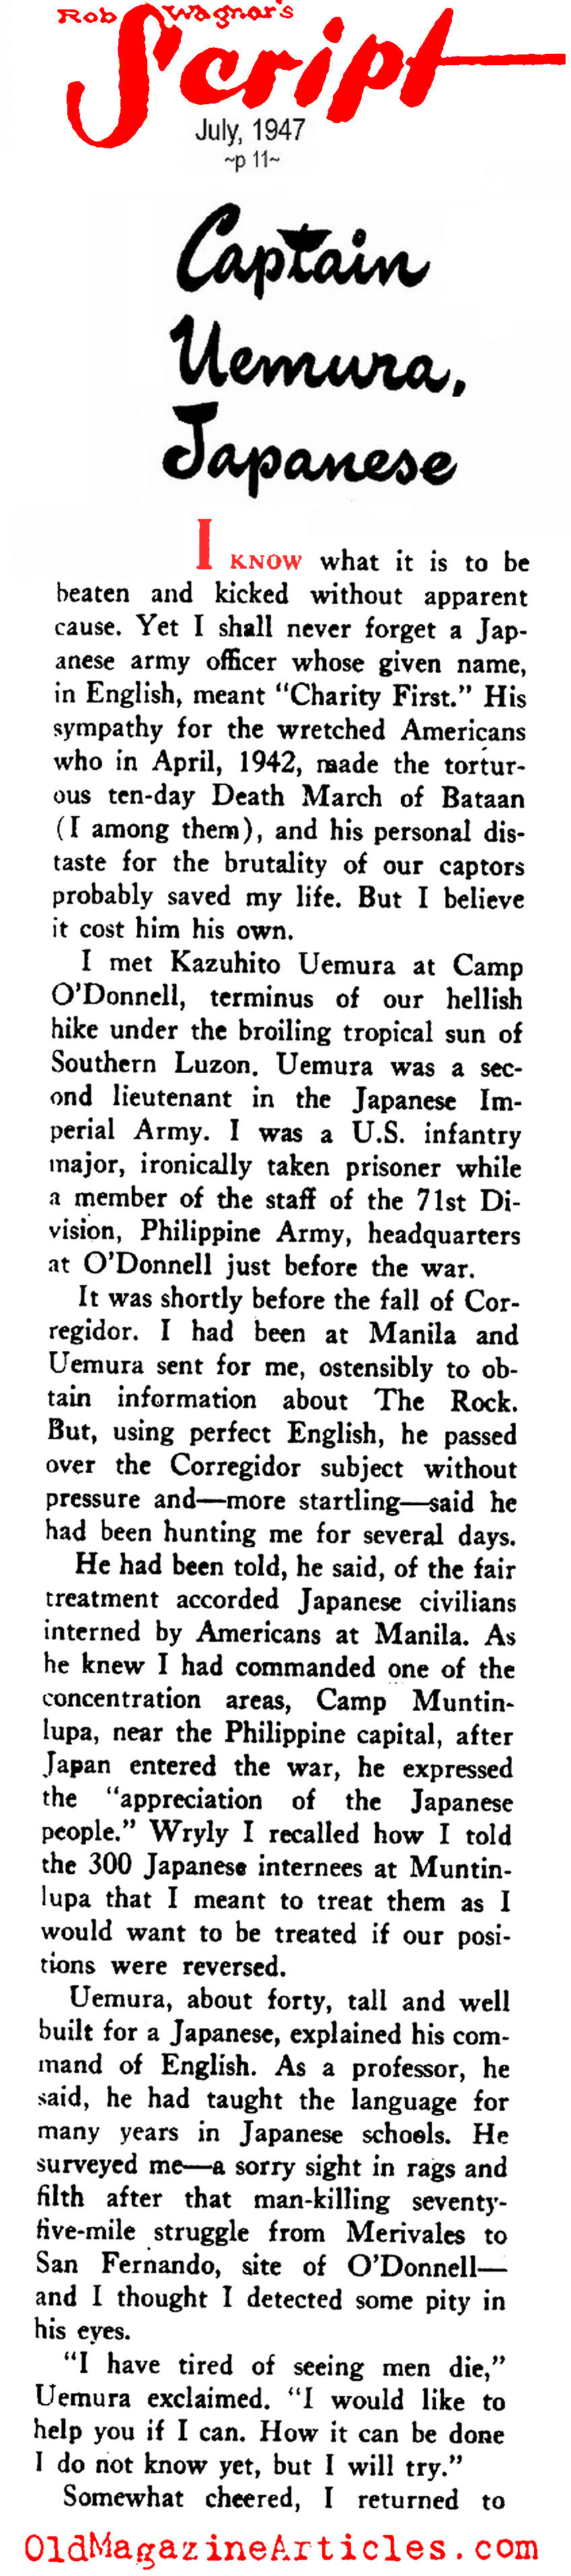 Remembering Captain Uemumra (Rob Wagner's Script Magazine, 1947)